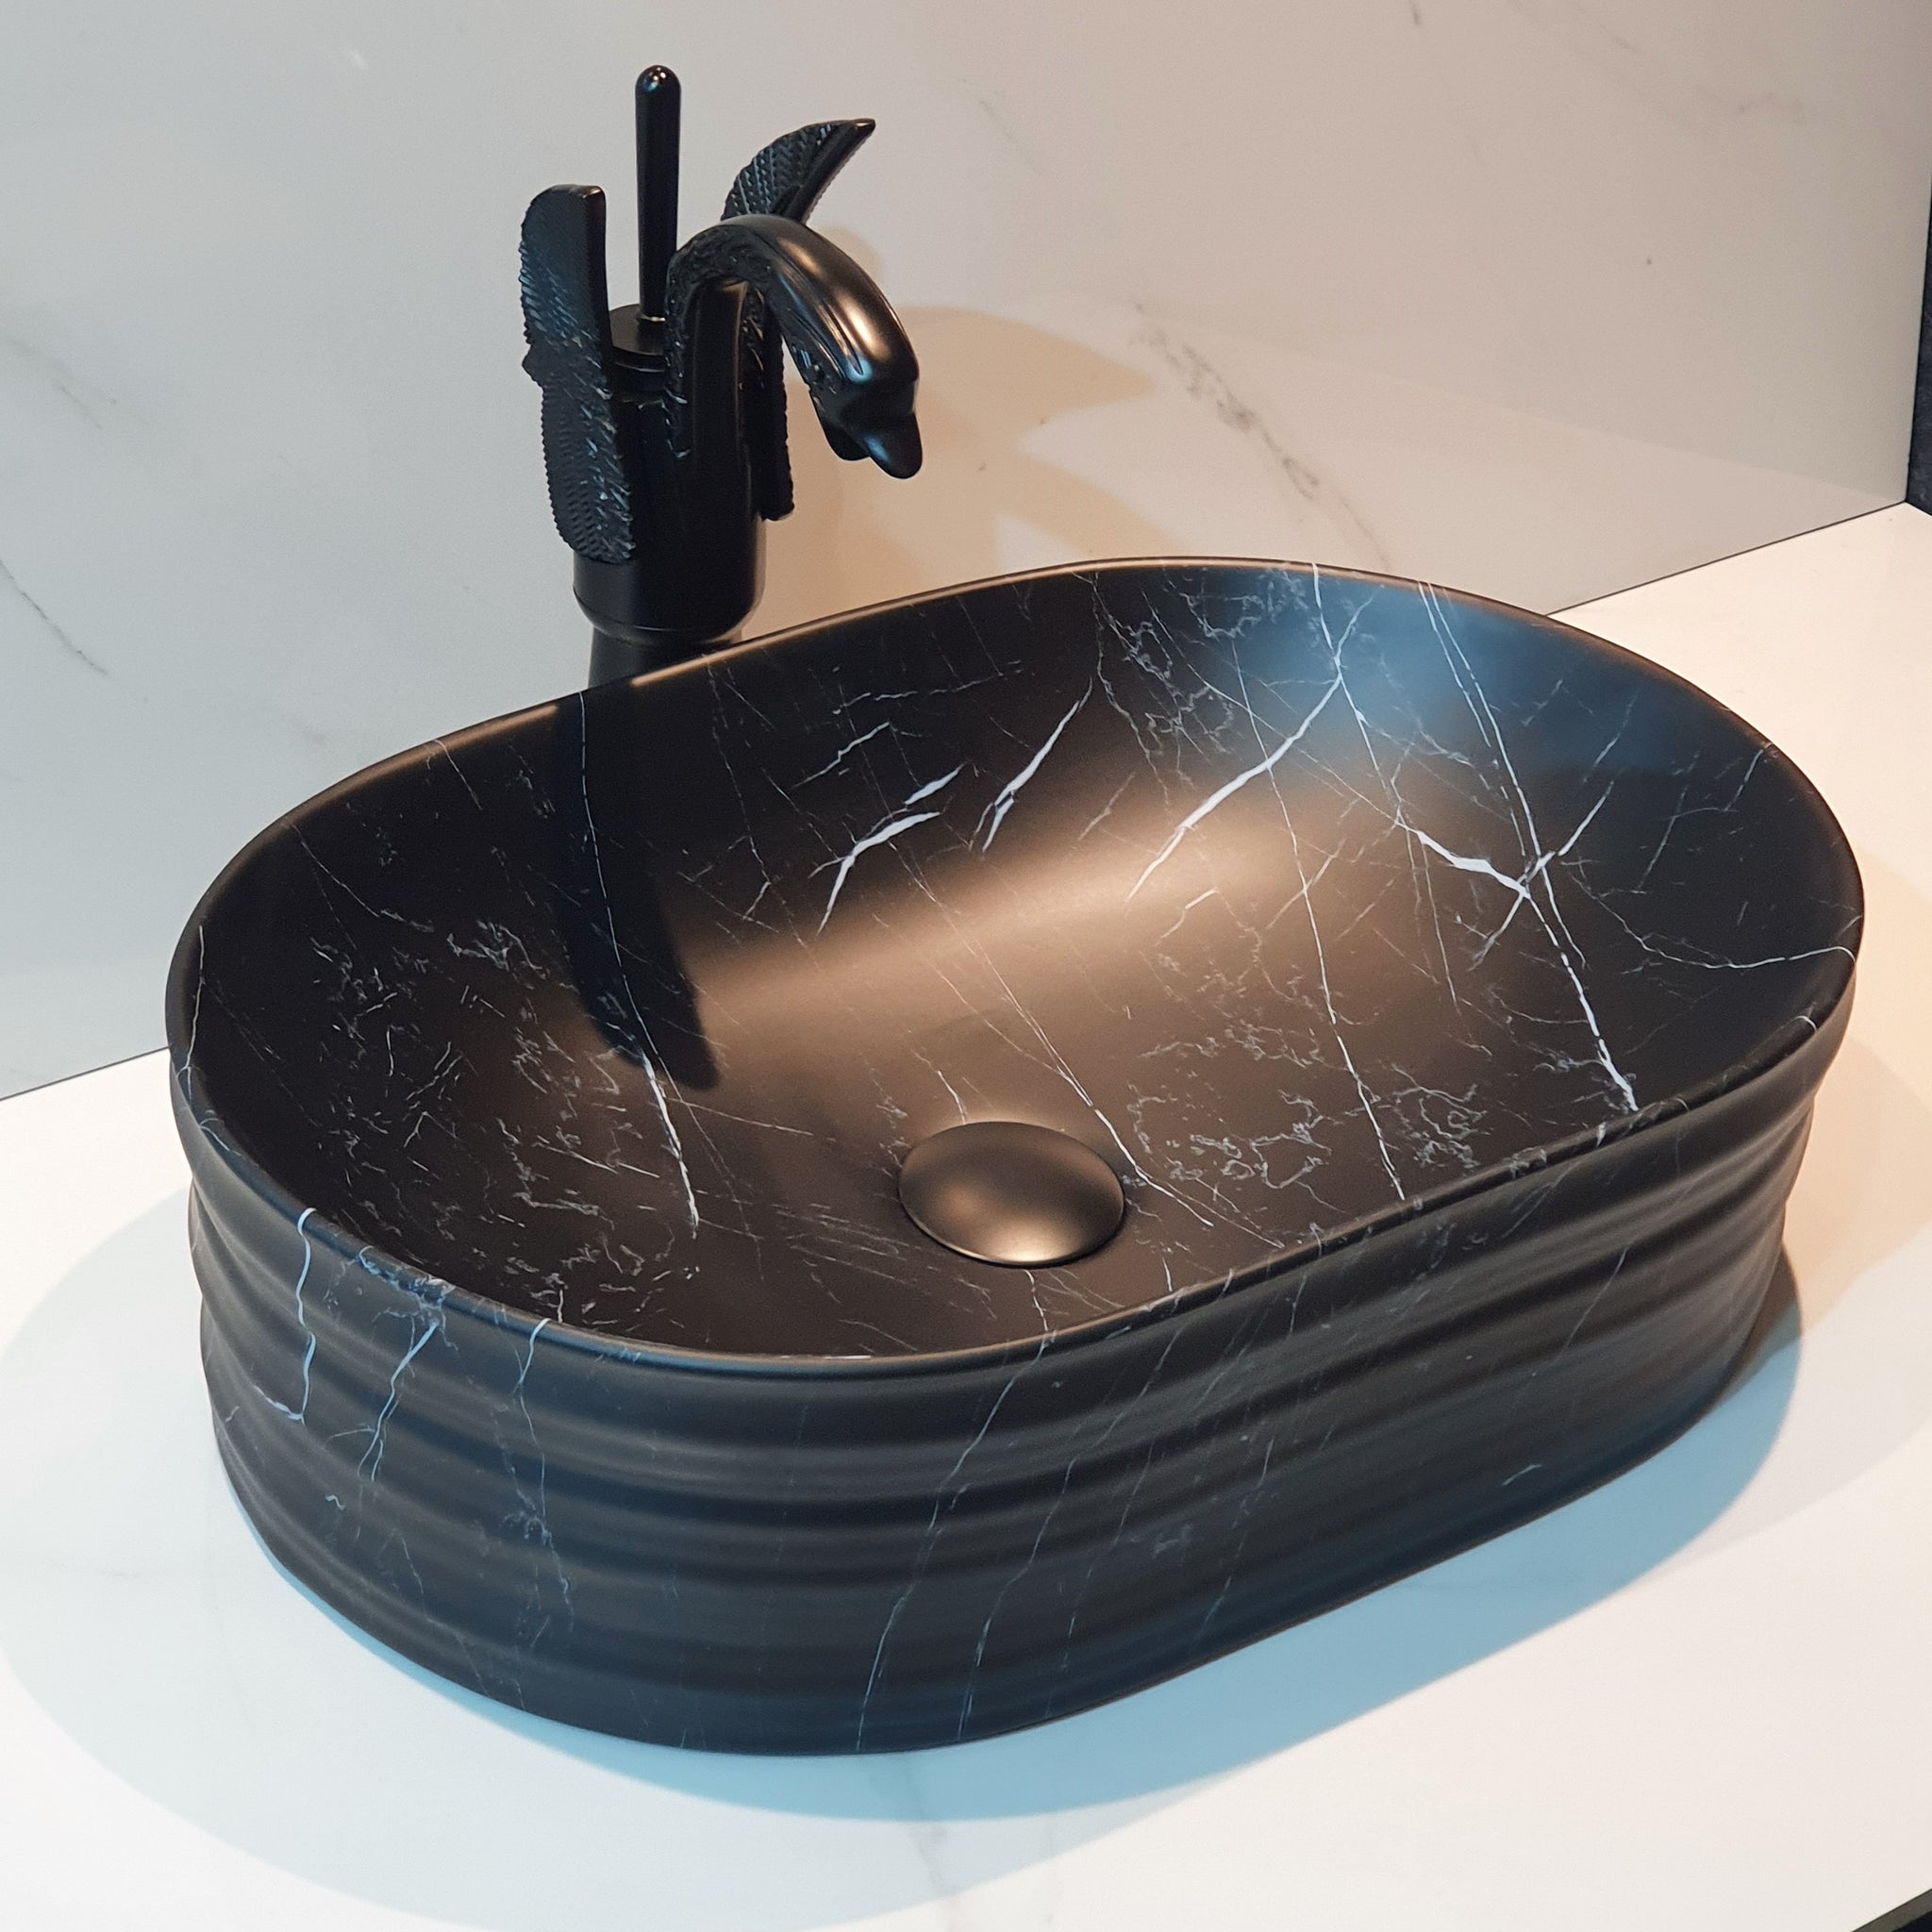 B Backline Ceramic Table Top, Counter Top Wash Basin 18 X 13 X 5 Inch Black Matt